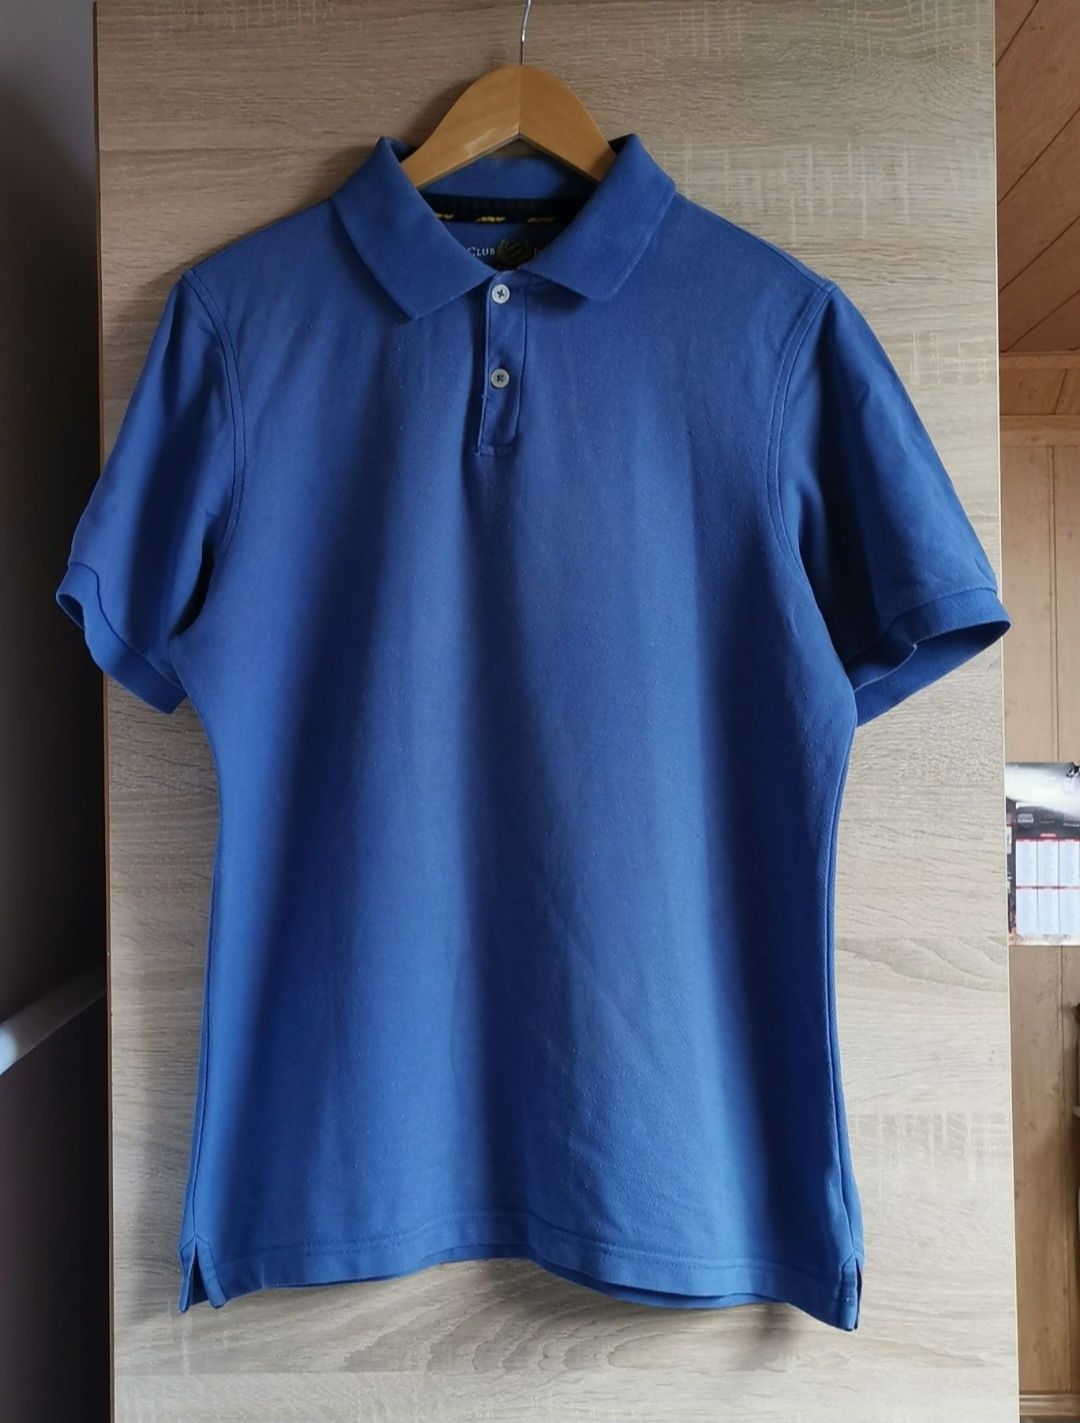 Koszulka polo męska niebieska Club Room rozmiar M/L stan bdb